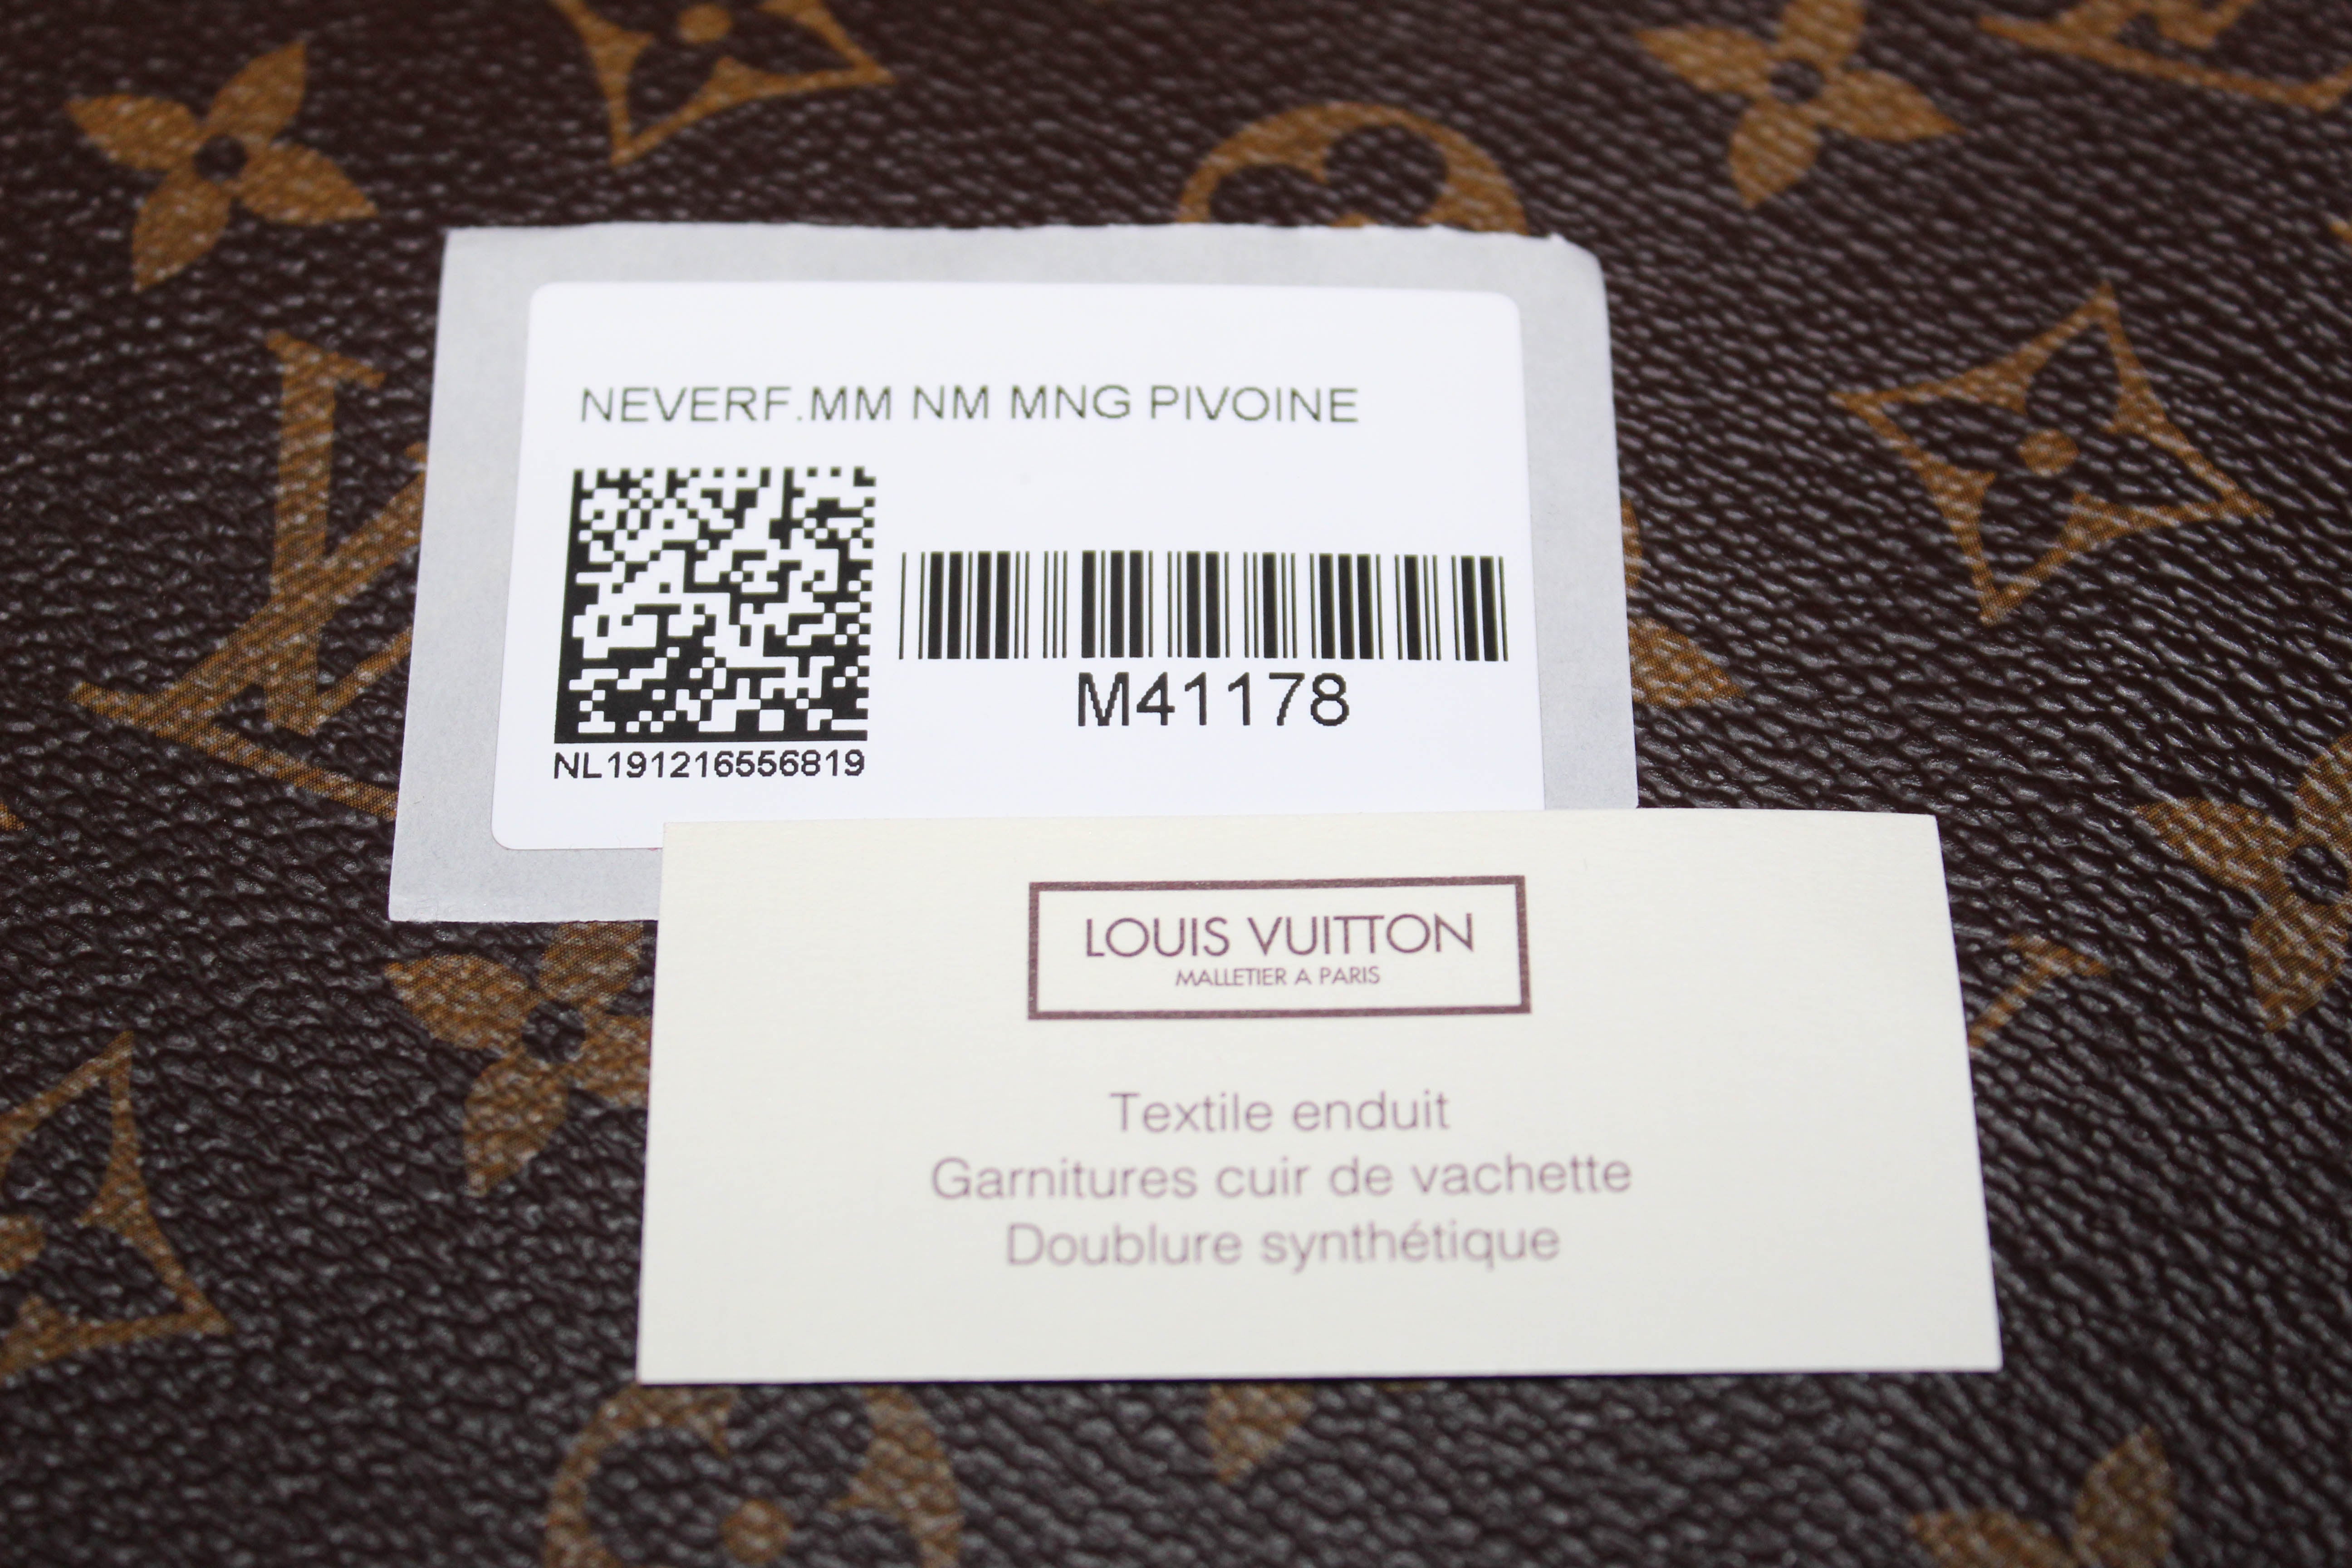 LOUIS VUITTON Neverfull Size MM Monogram Pivoine M41178